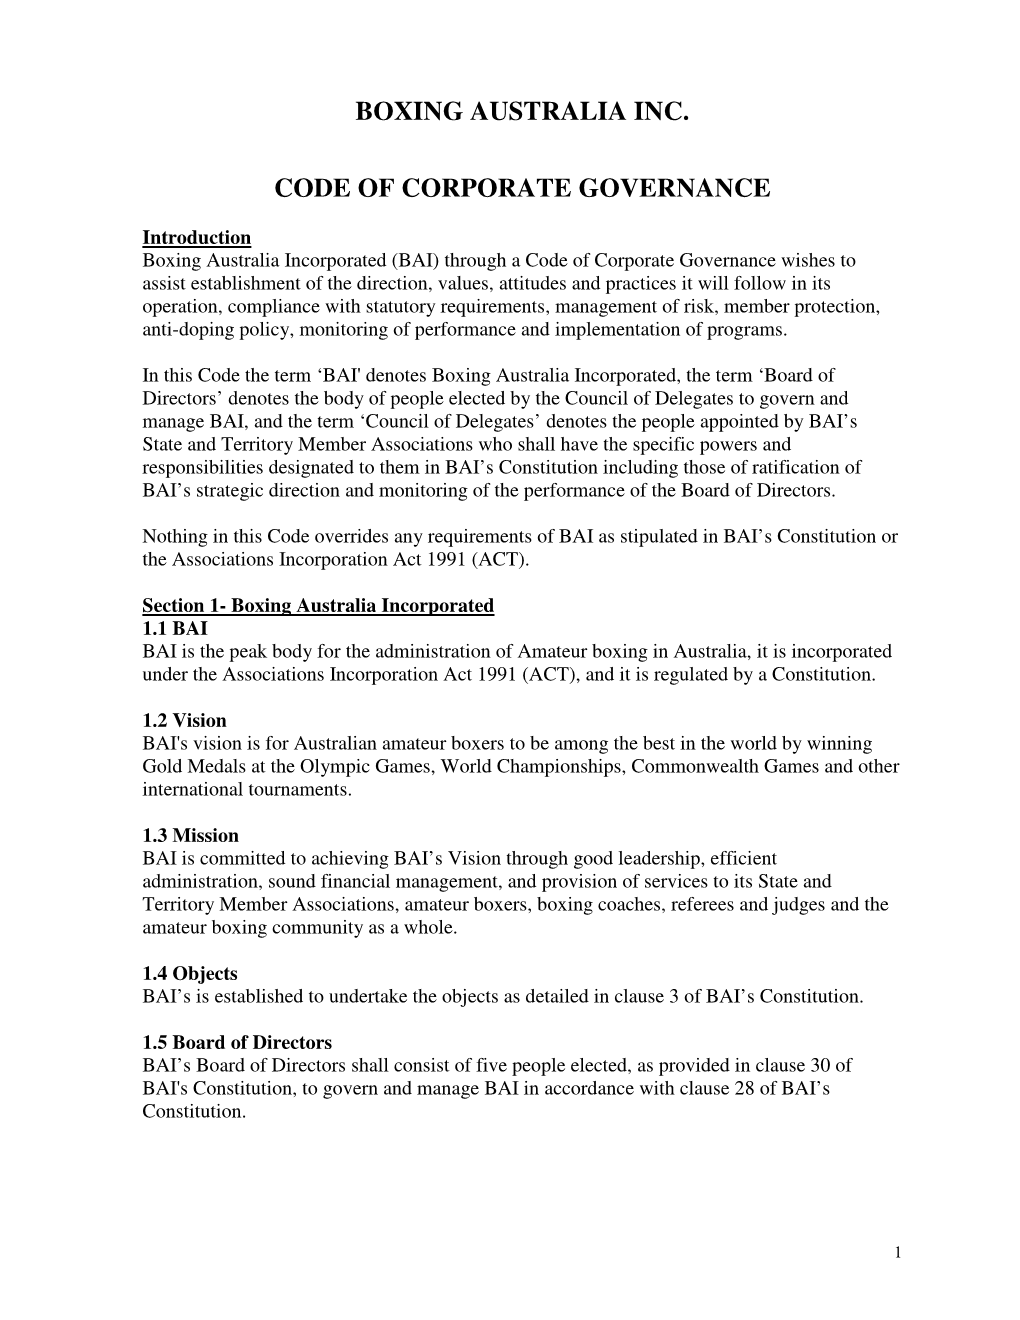 Boxing Australia Inc. Code of Corporate Governance